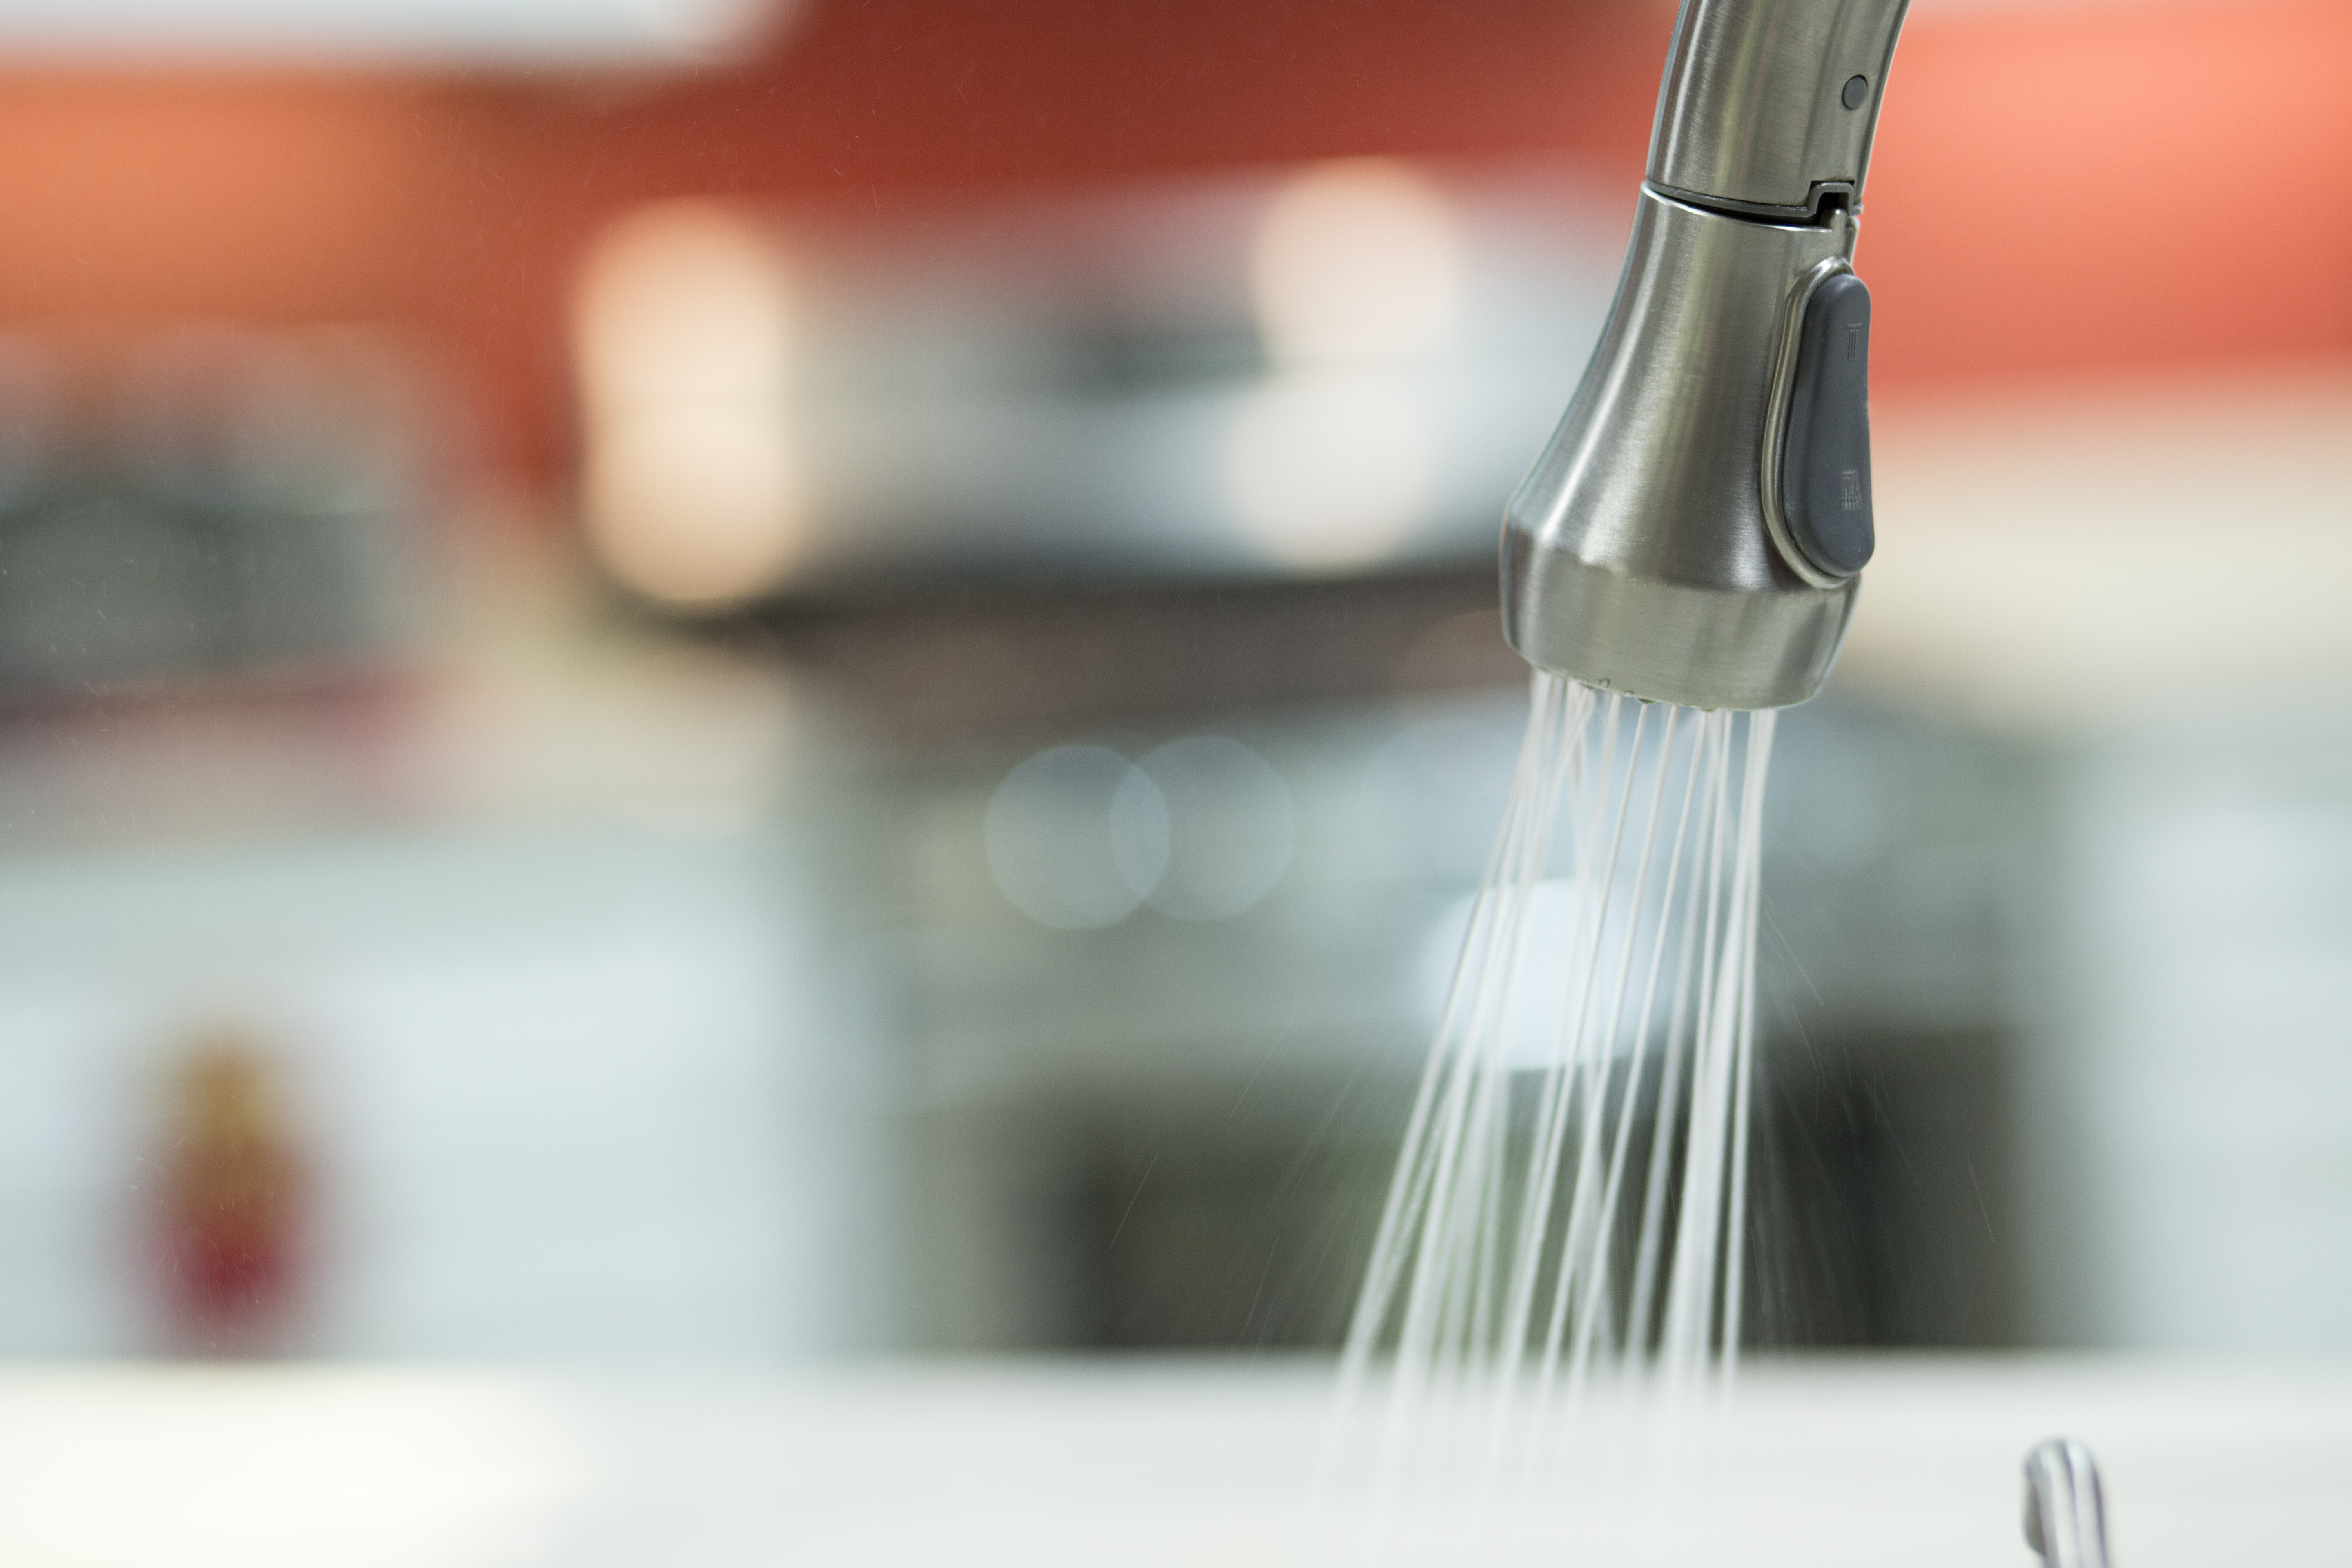 How To Fix A Moen Kitchen Sink Sprayer